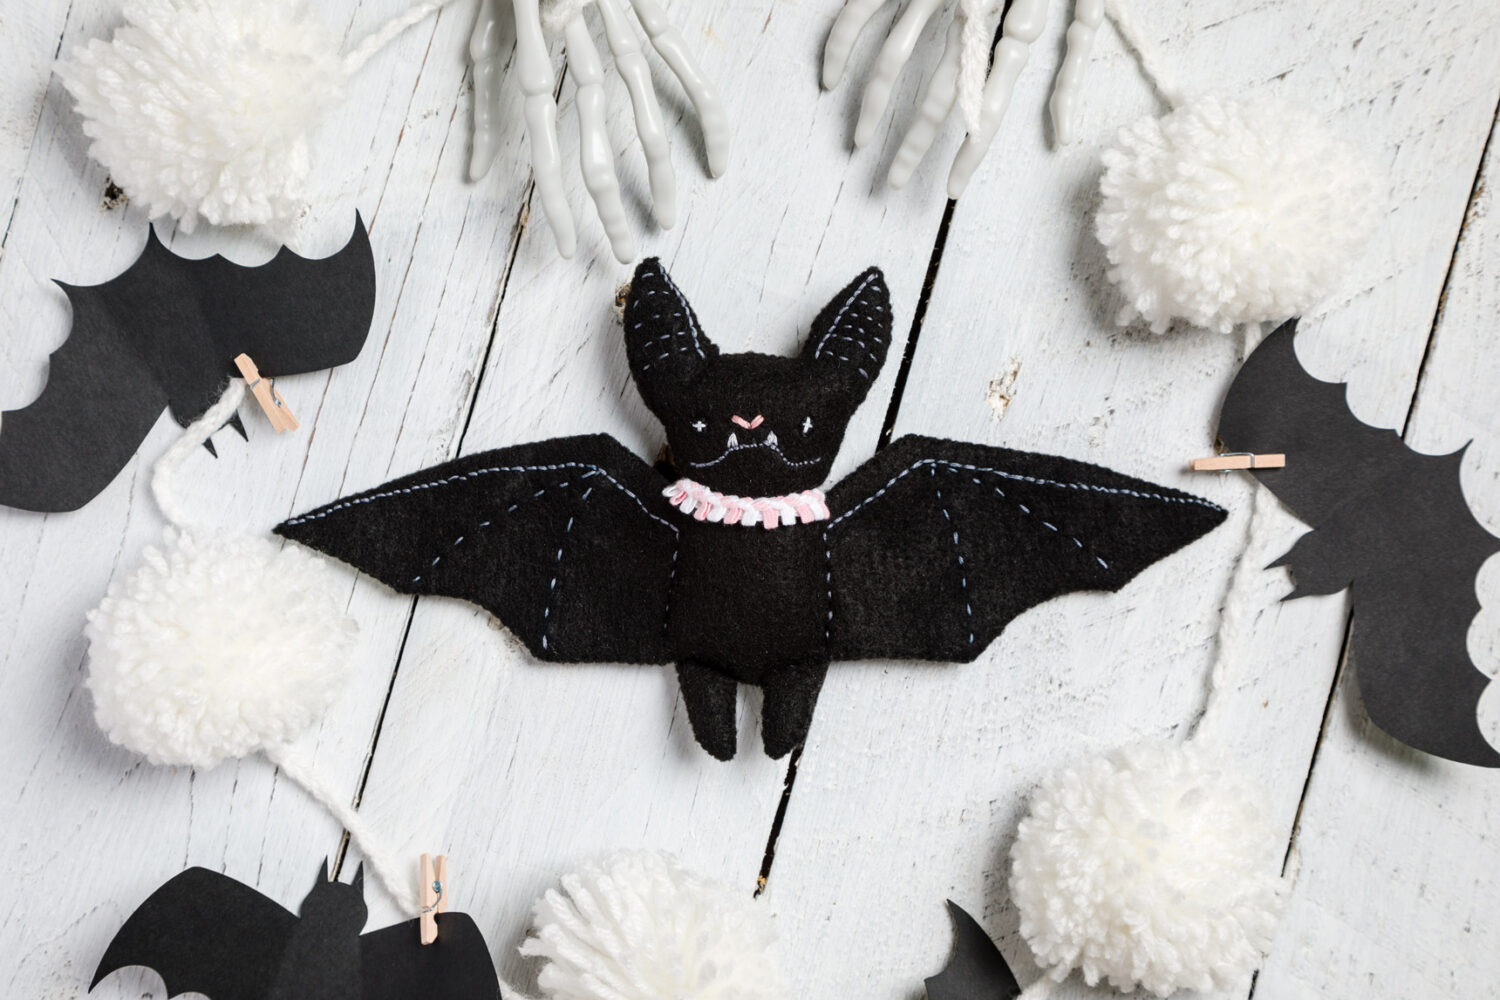 How to make a Hand Sewn Stuffed Bat